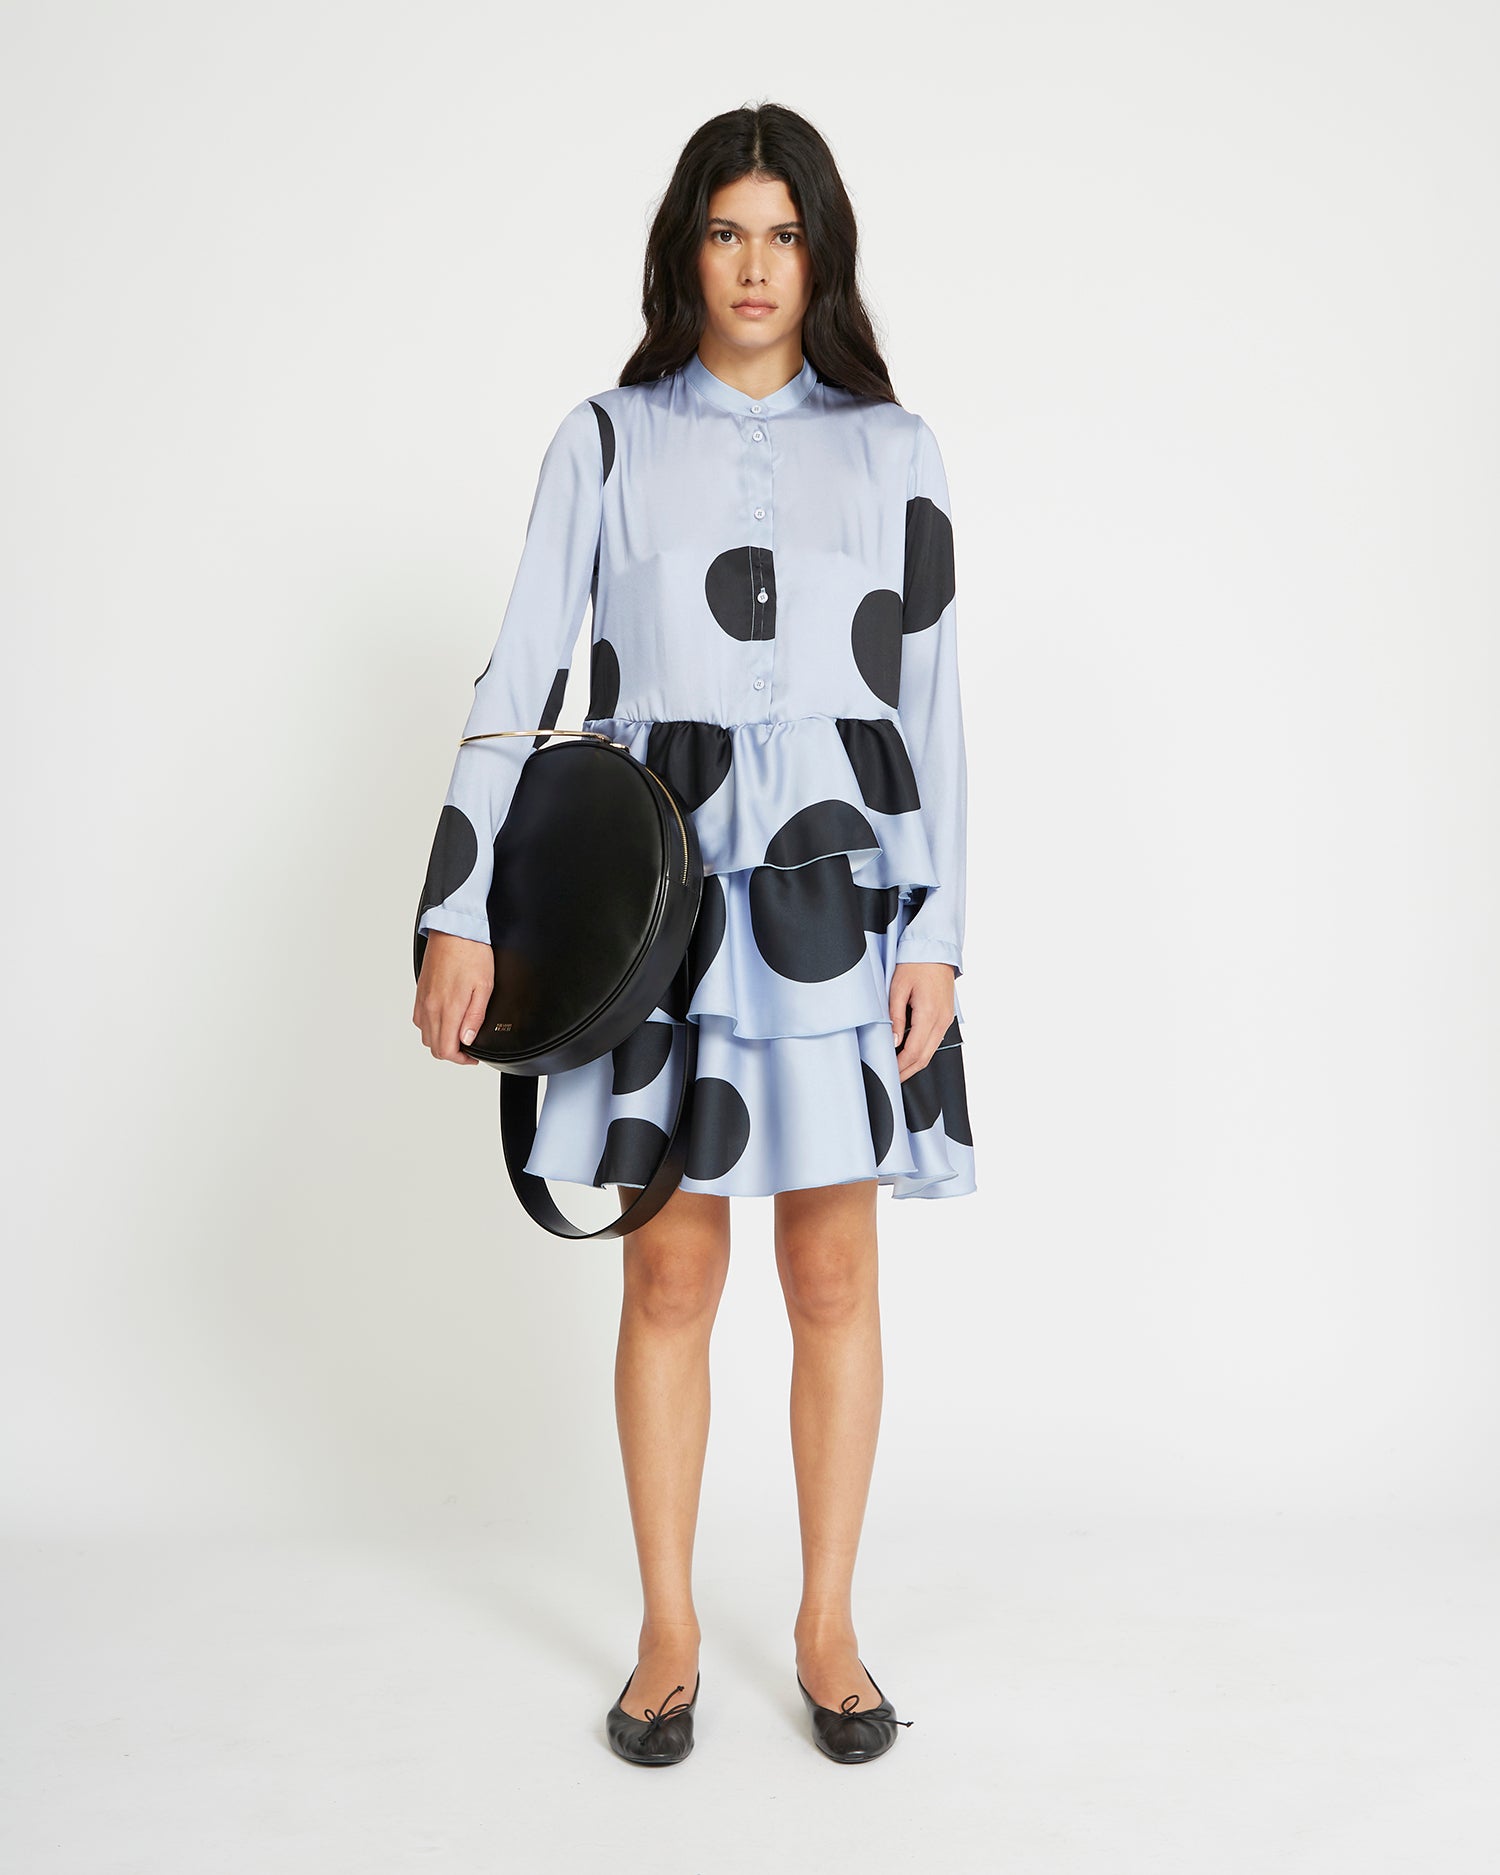 Short shirtdress with polka dot pattern